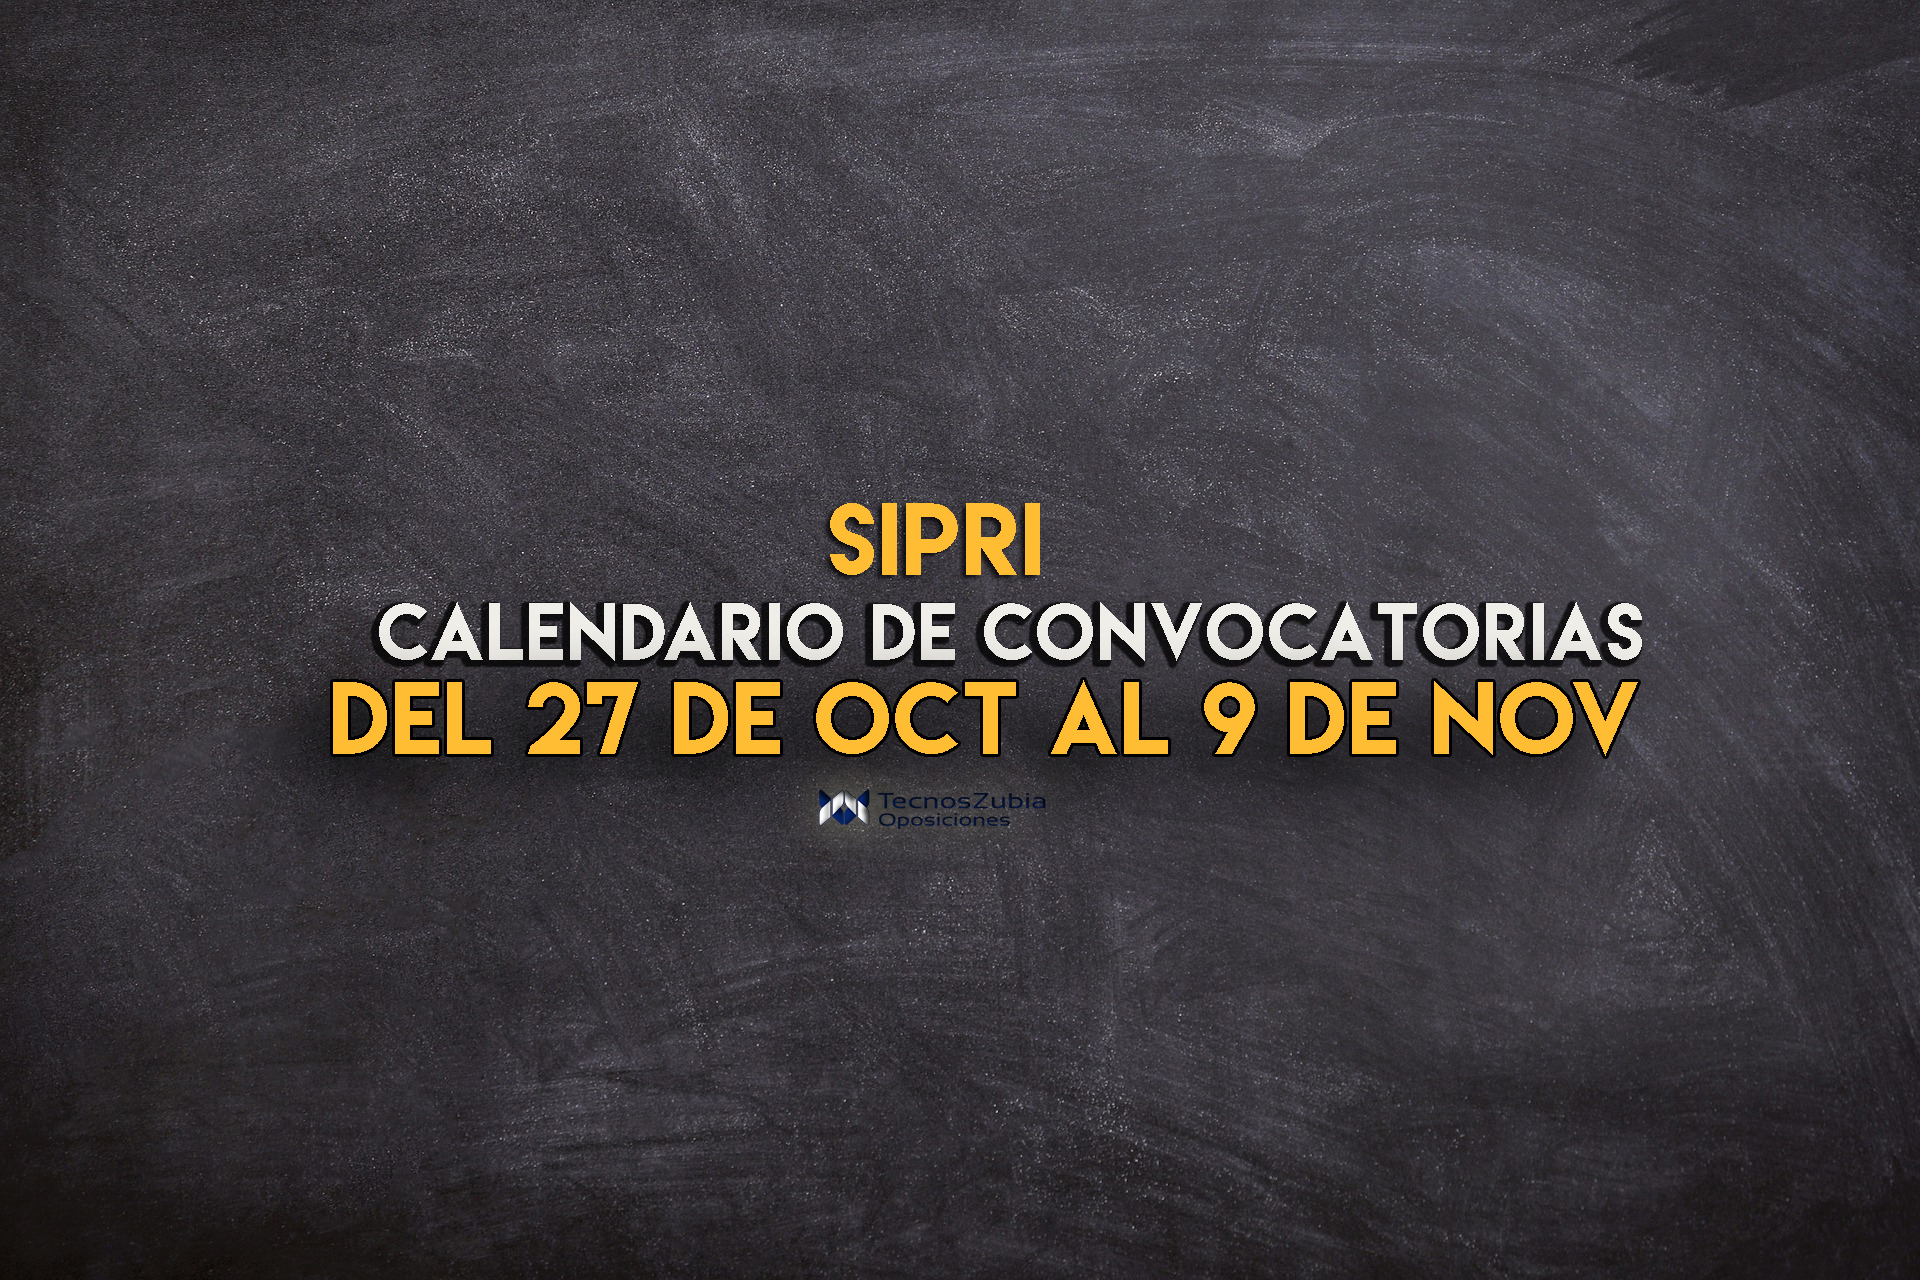 SIPRI Calendario de convocatorias 27 octubre a 9 de noviembre